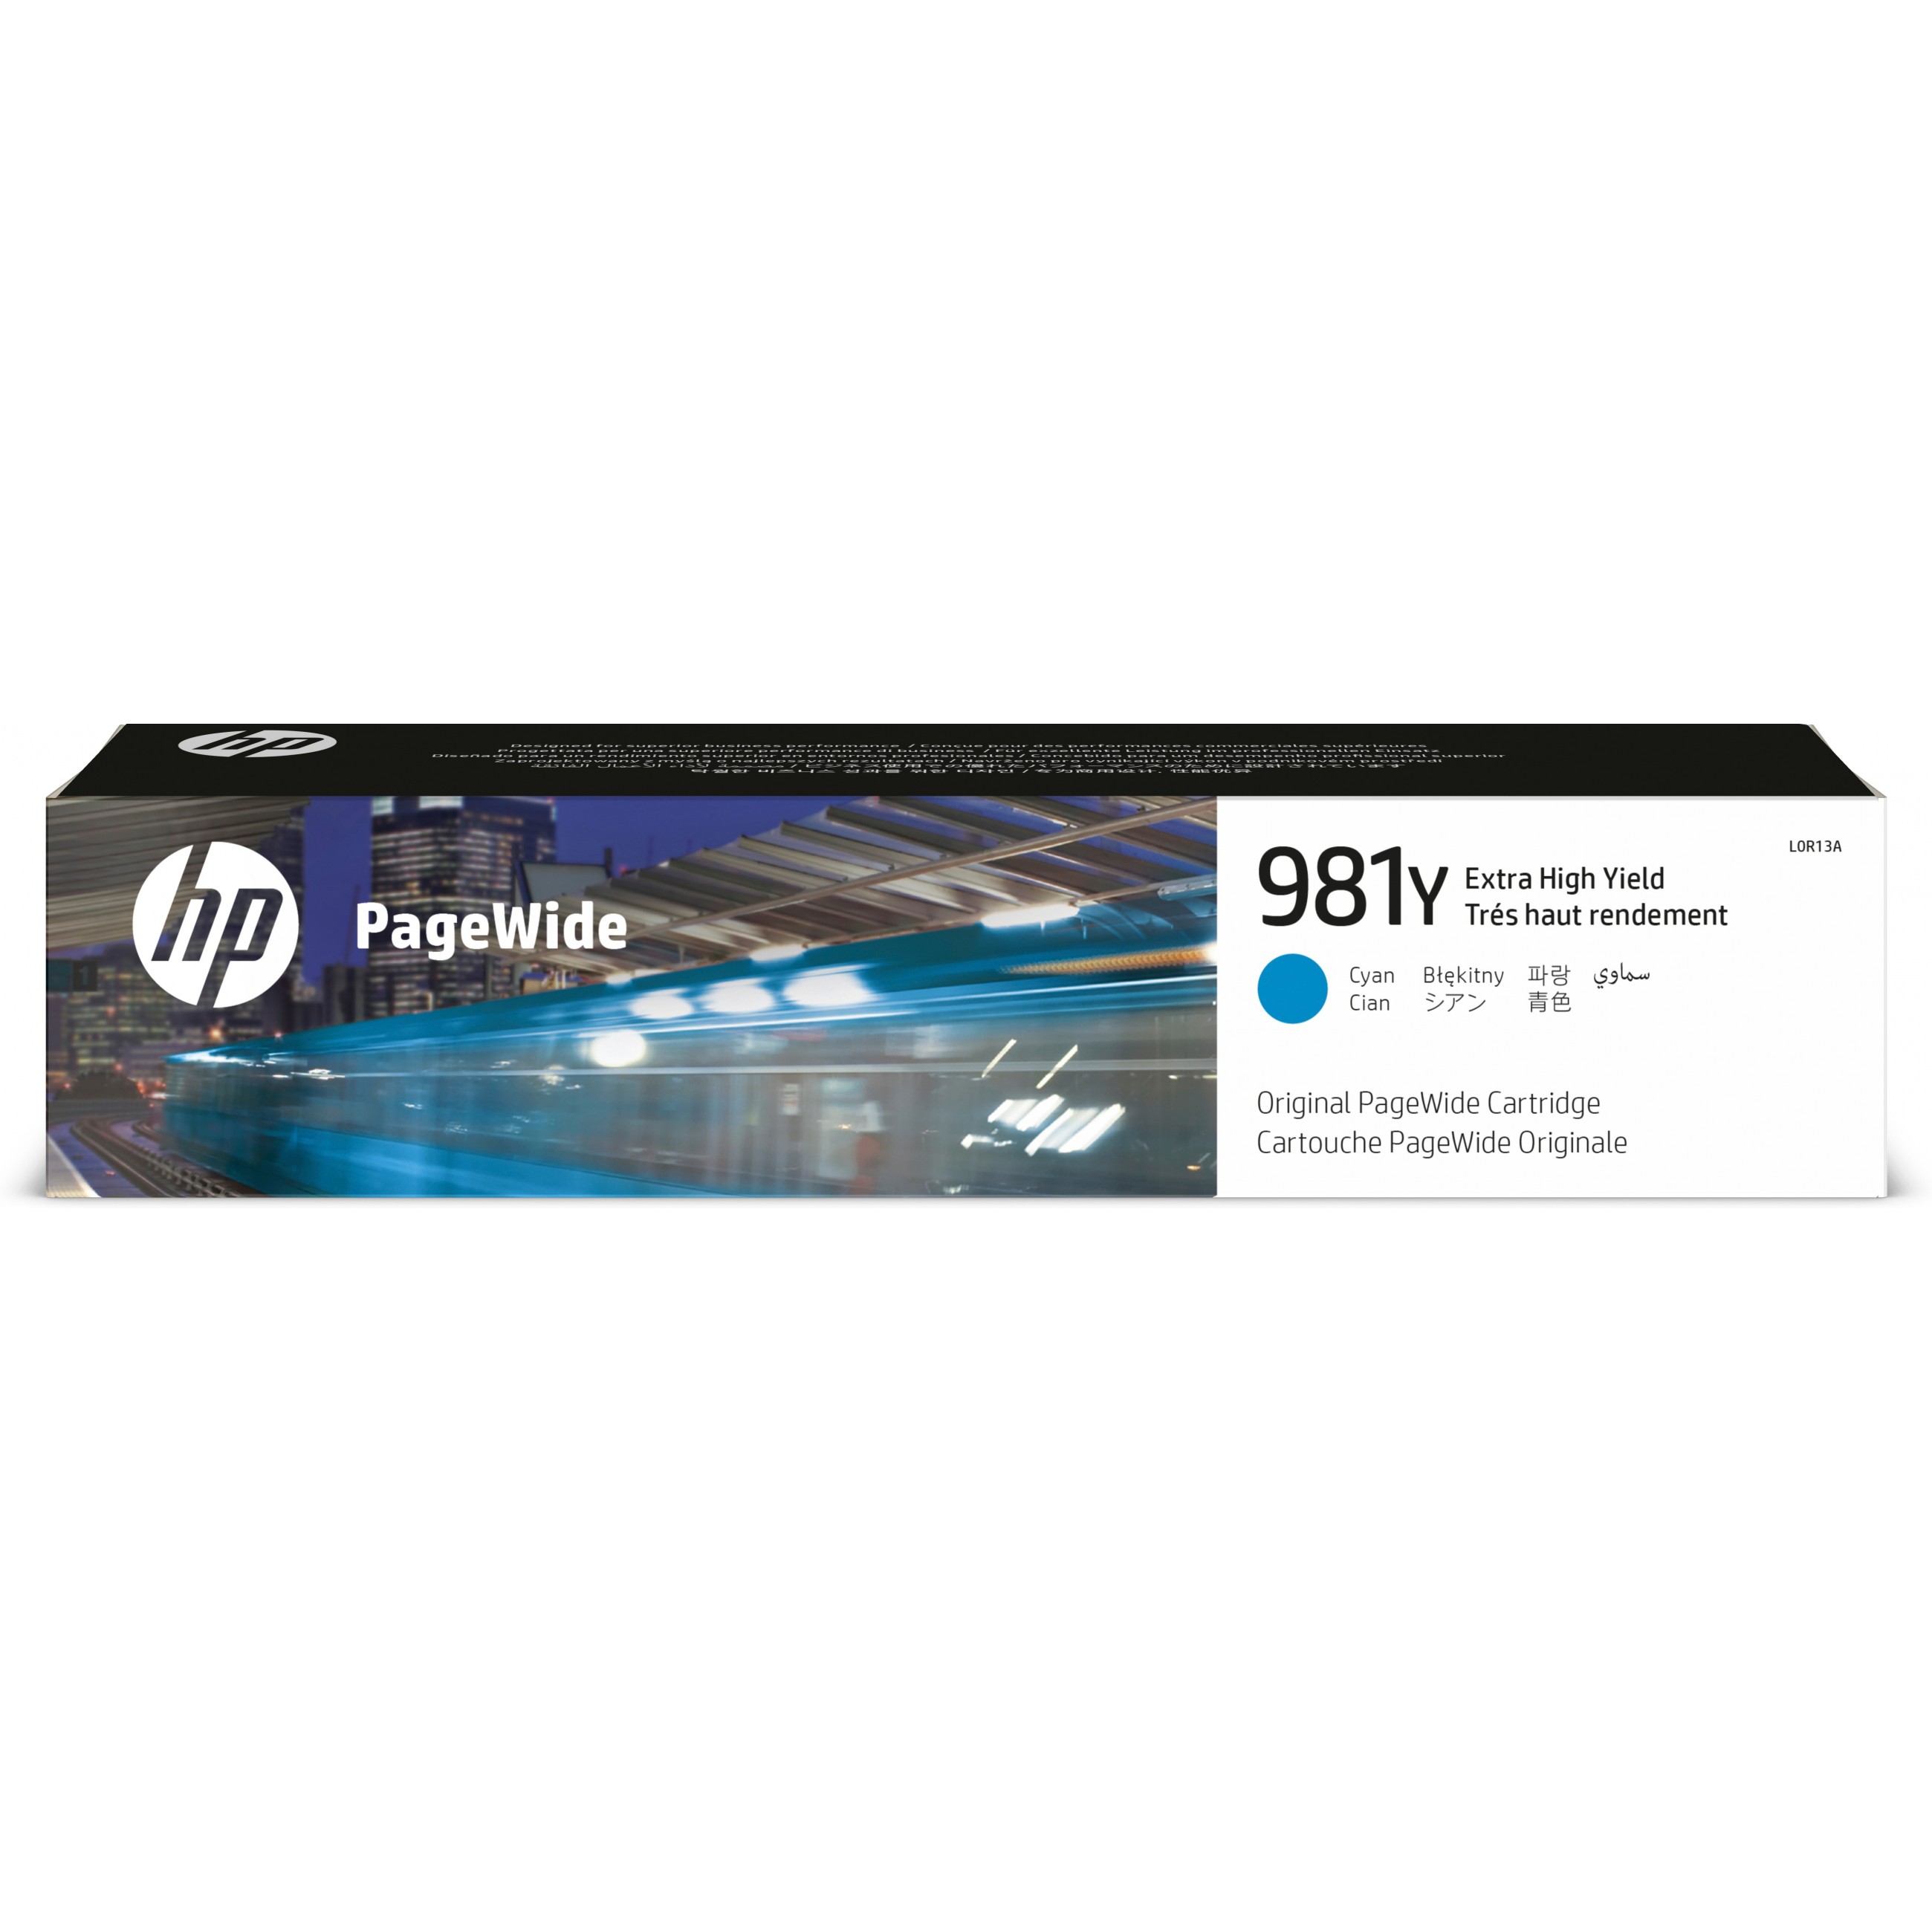 HP 981Y Extra High Yield Cyan Original PageWide Cartridge ink - L0R13A